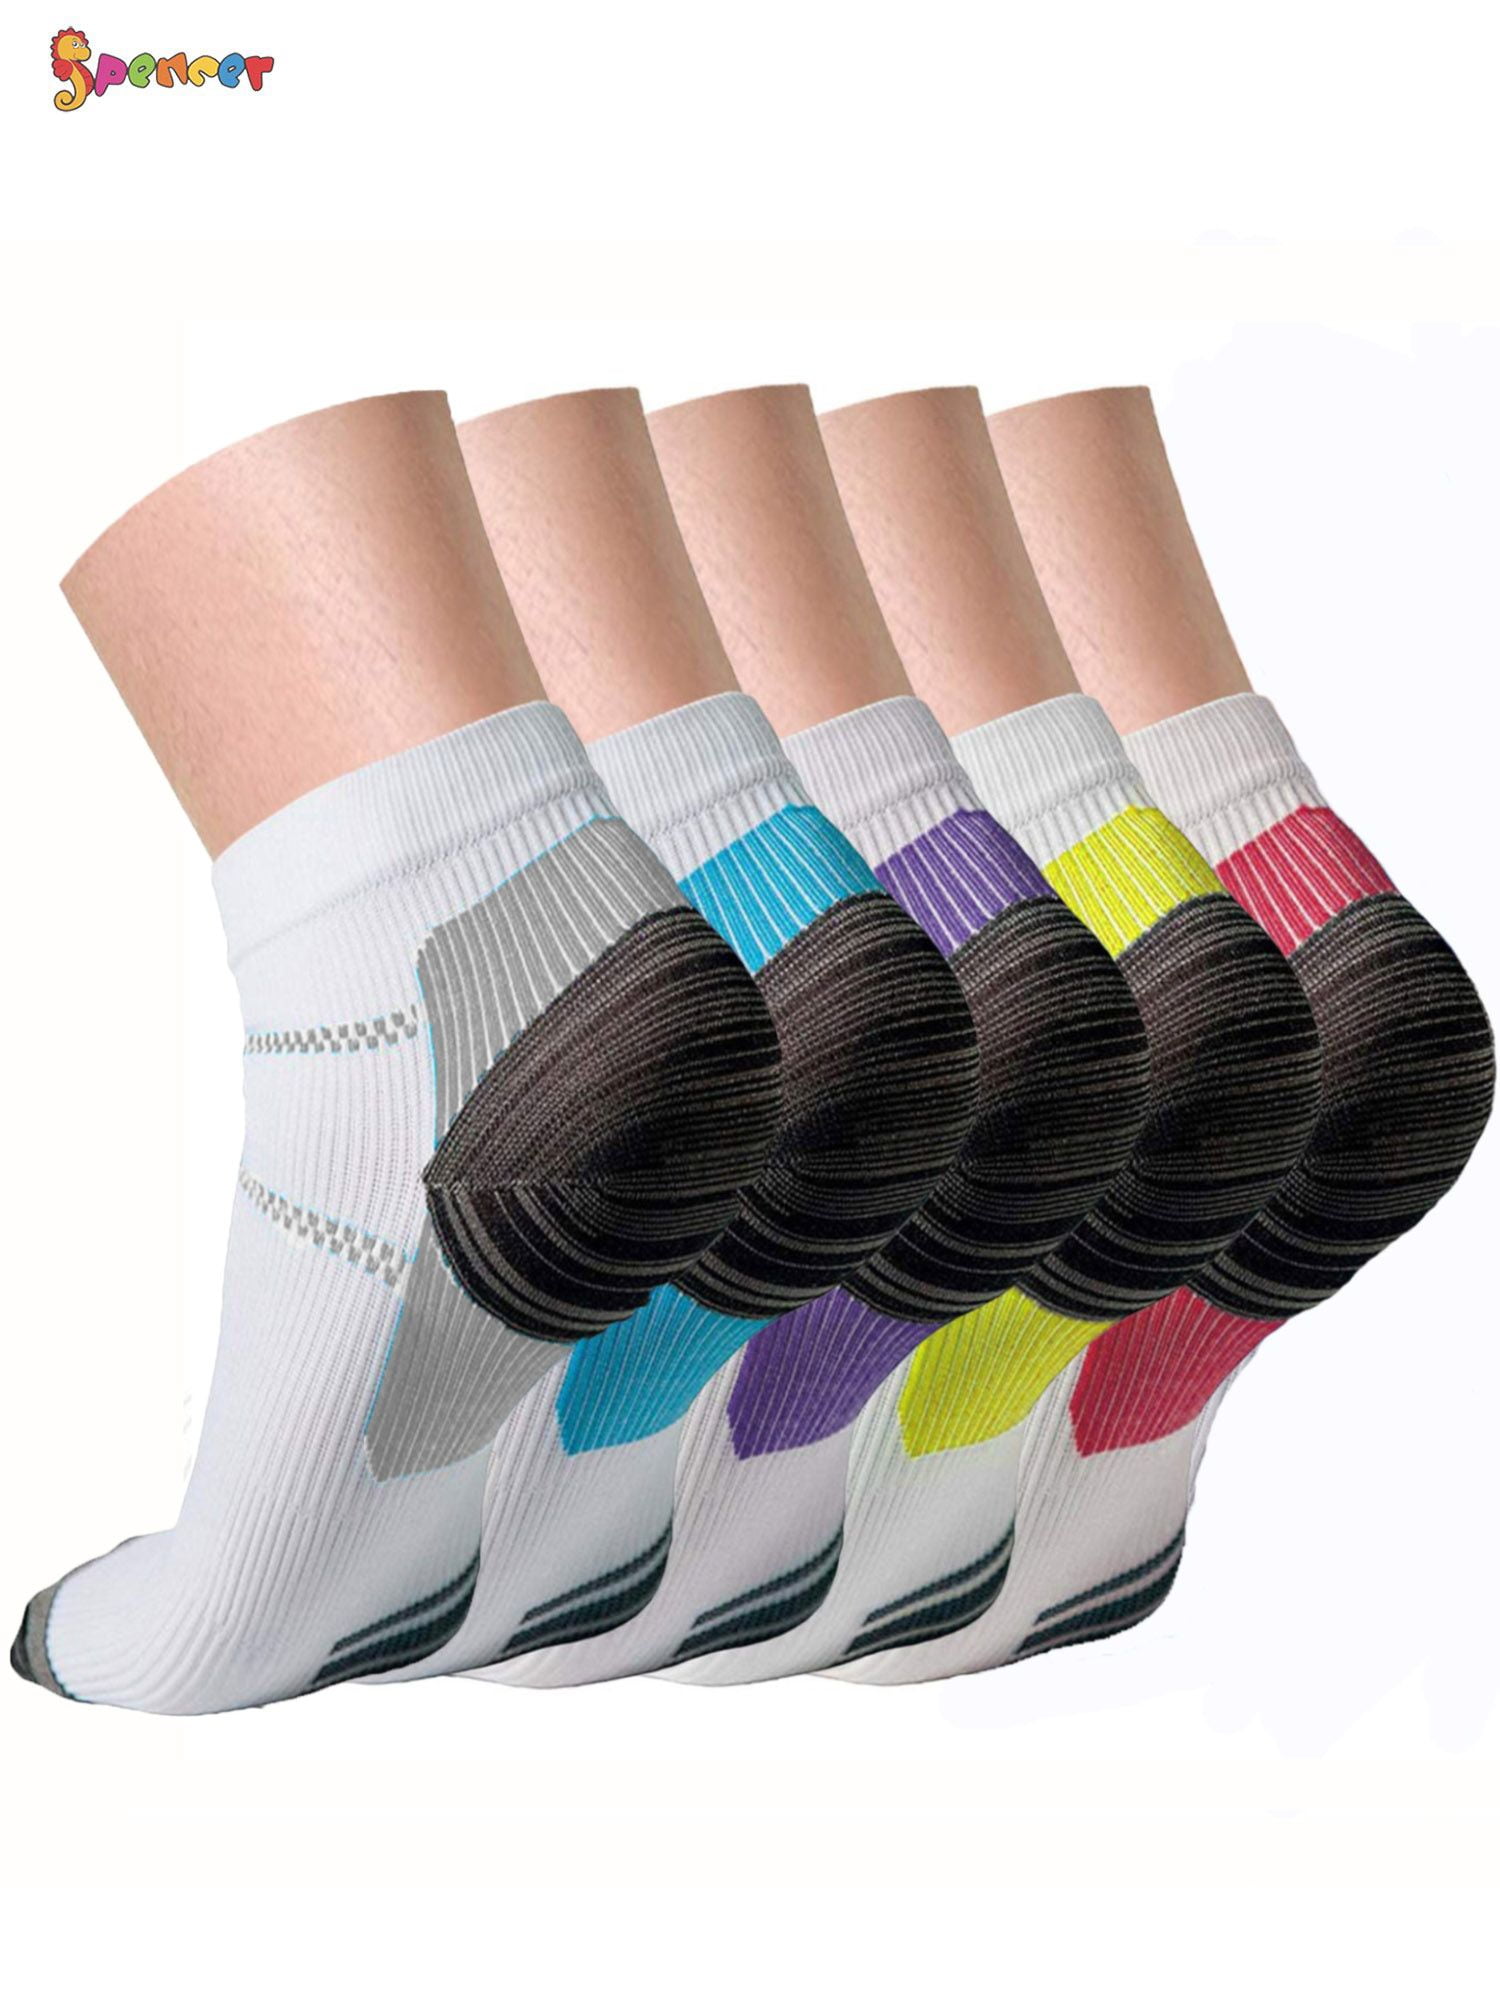 Ankle Socks Foot Compression Socks Striped Multicolor Sport Casual Socks Unisex 